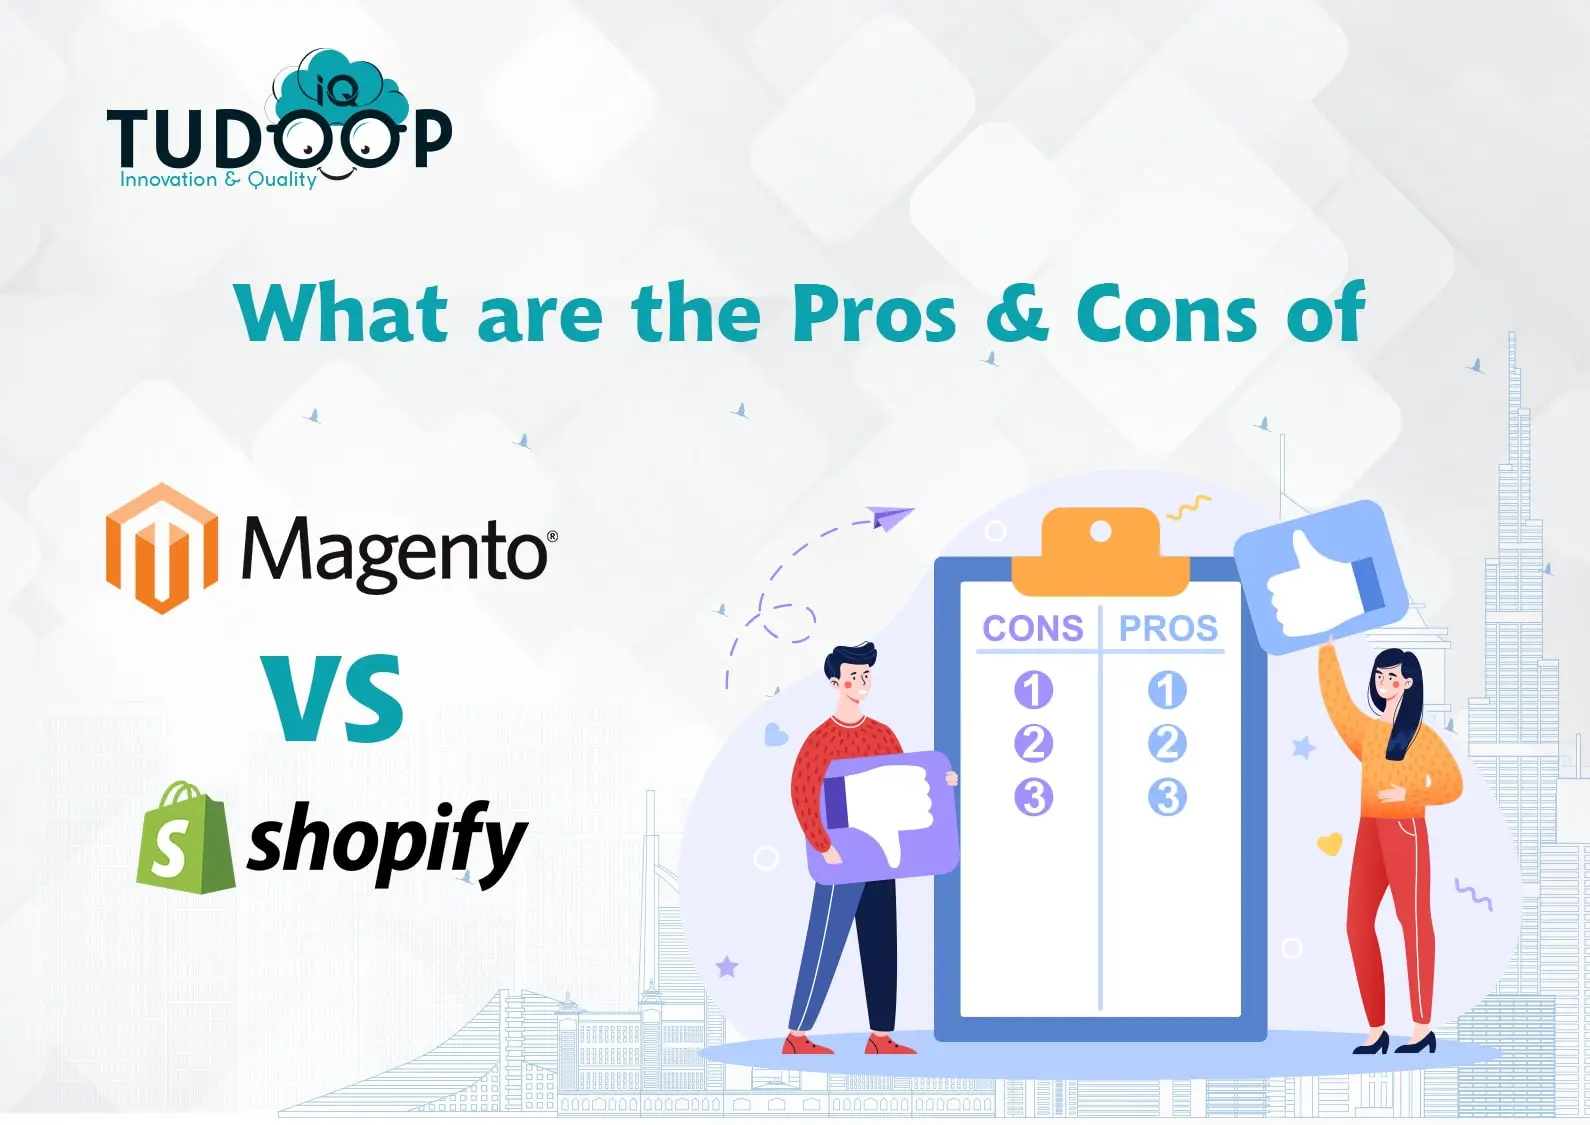 magento vs shopify pros and cons